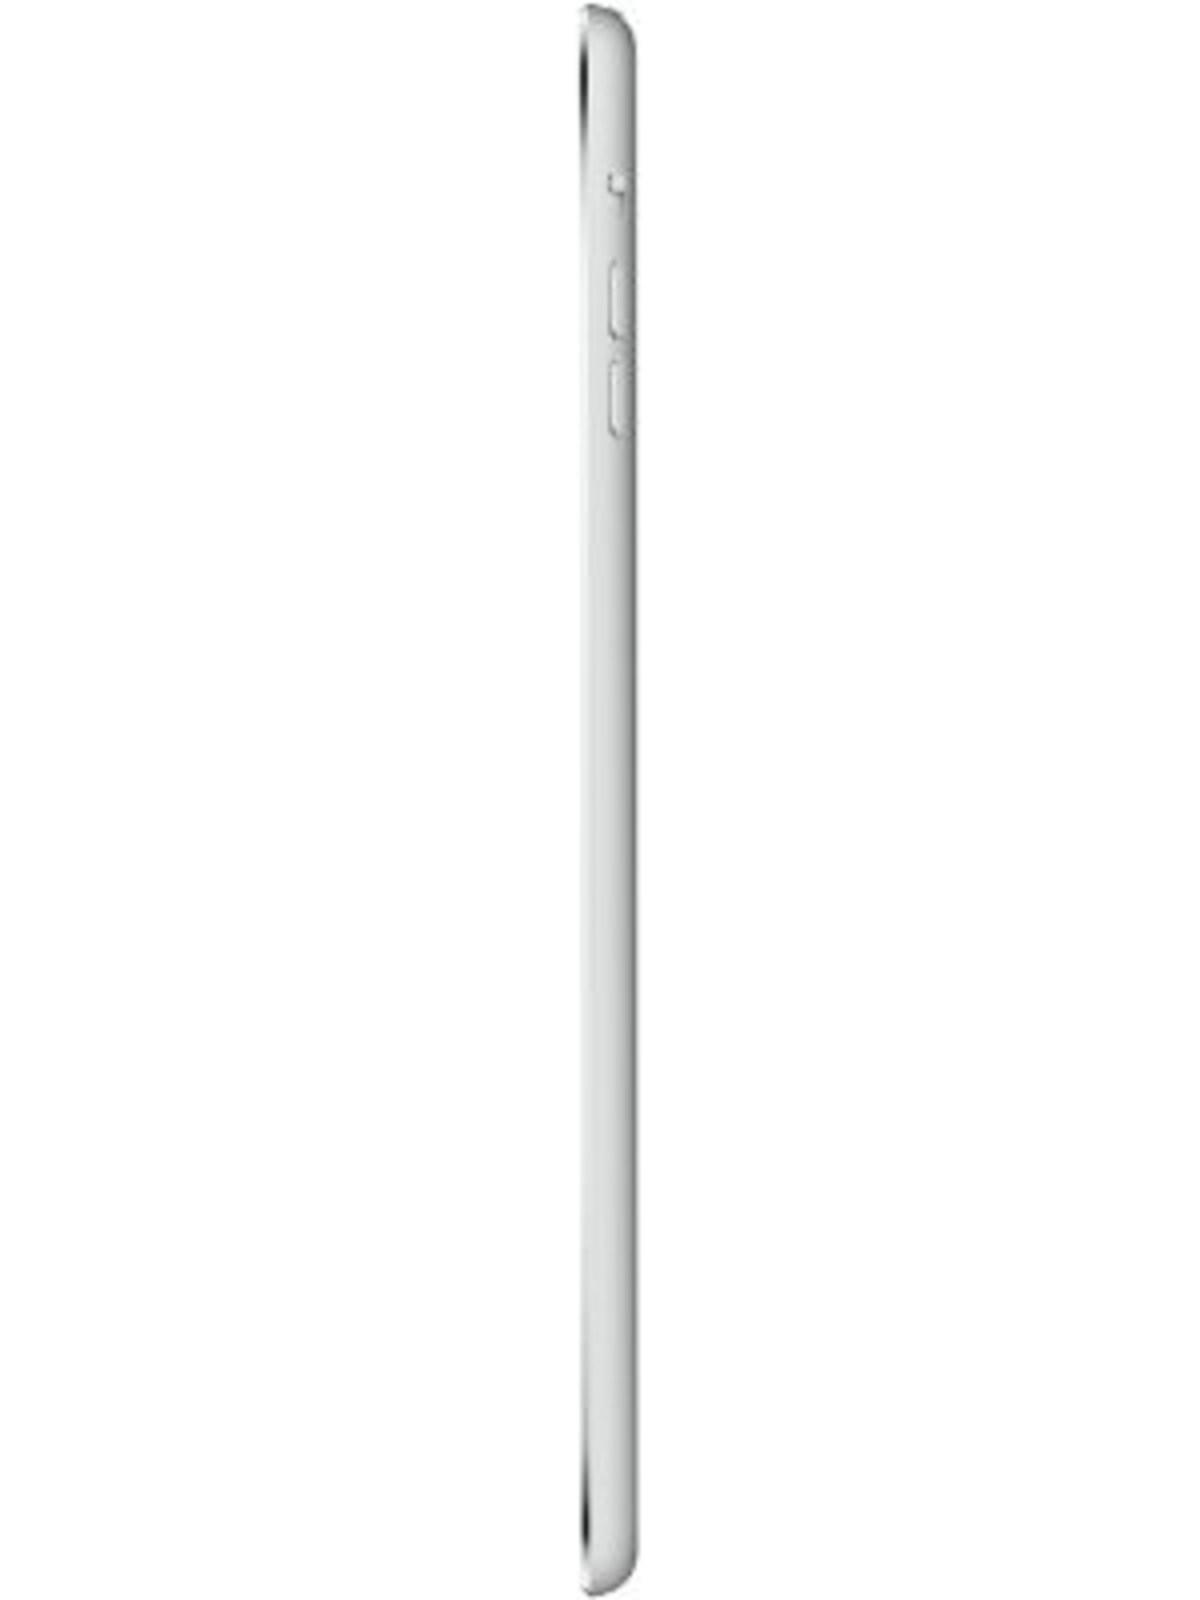 Apple ipad mini 2 with retina display india jay summers